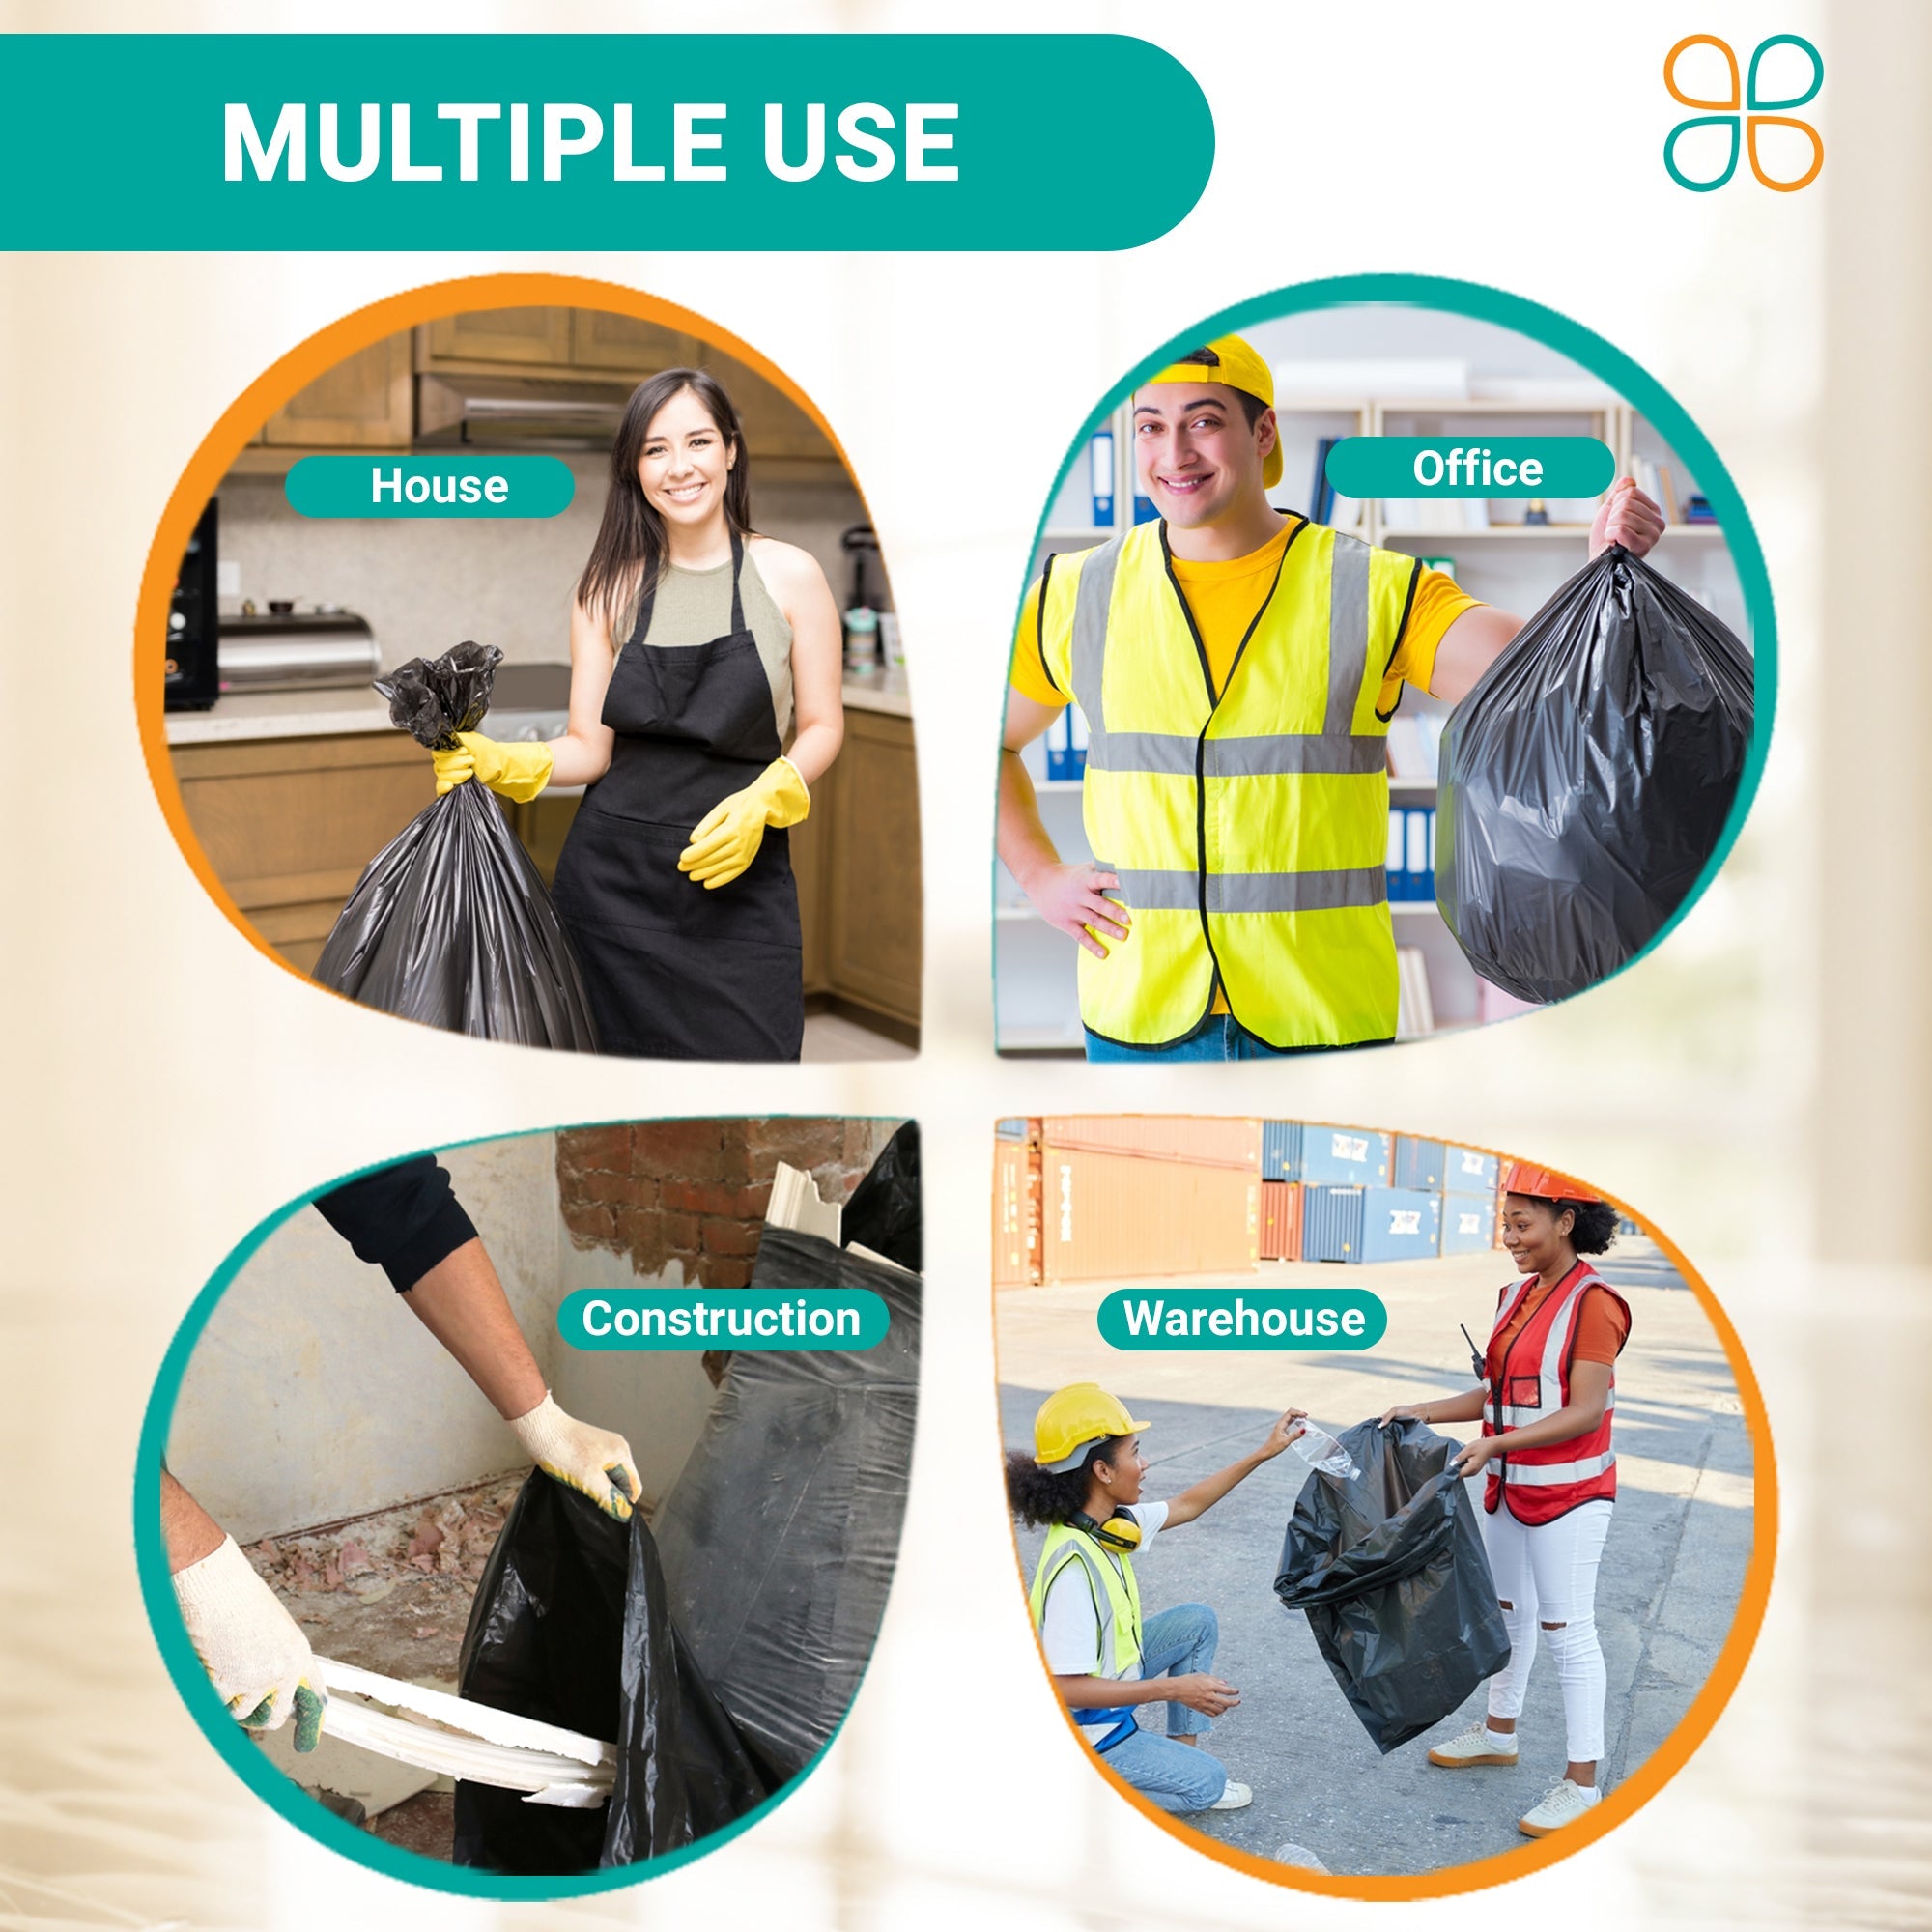 20-30 Gallon Garbage Bags: Black, 2 MIL, 30x36, 100 Bags. – PlasticMill